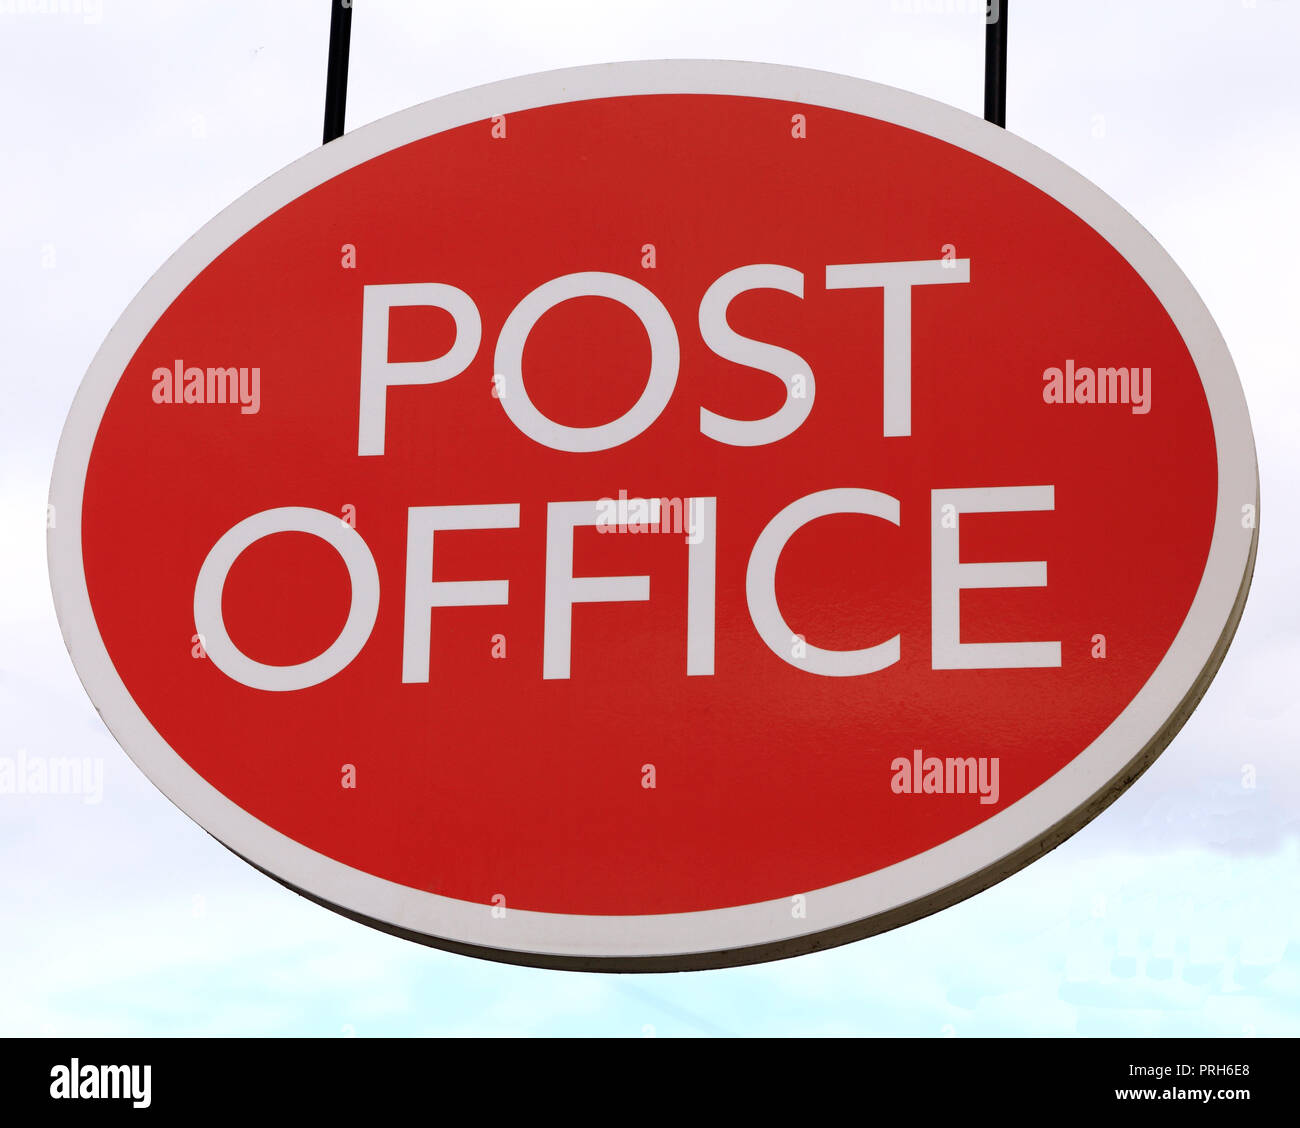 Bureau de poste, magasin, enseigne, logo, service postal, England, UK Banque D'Images